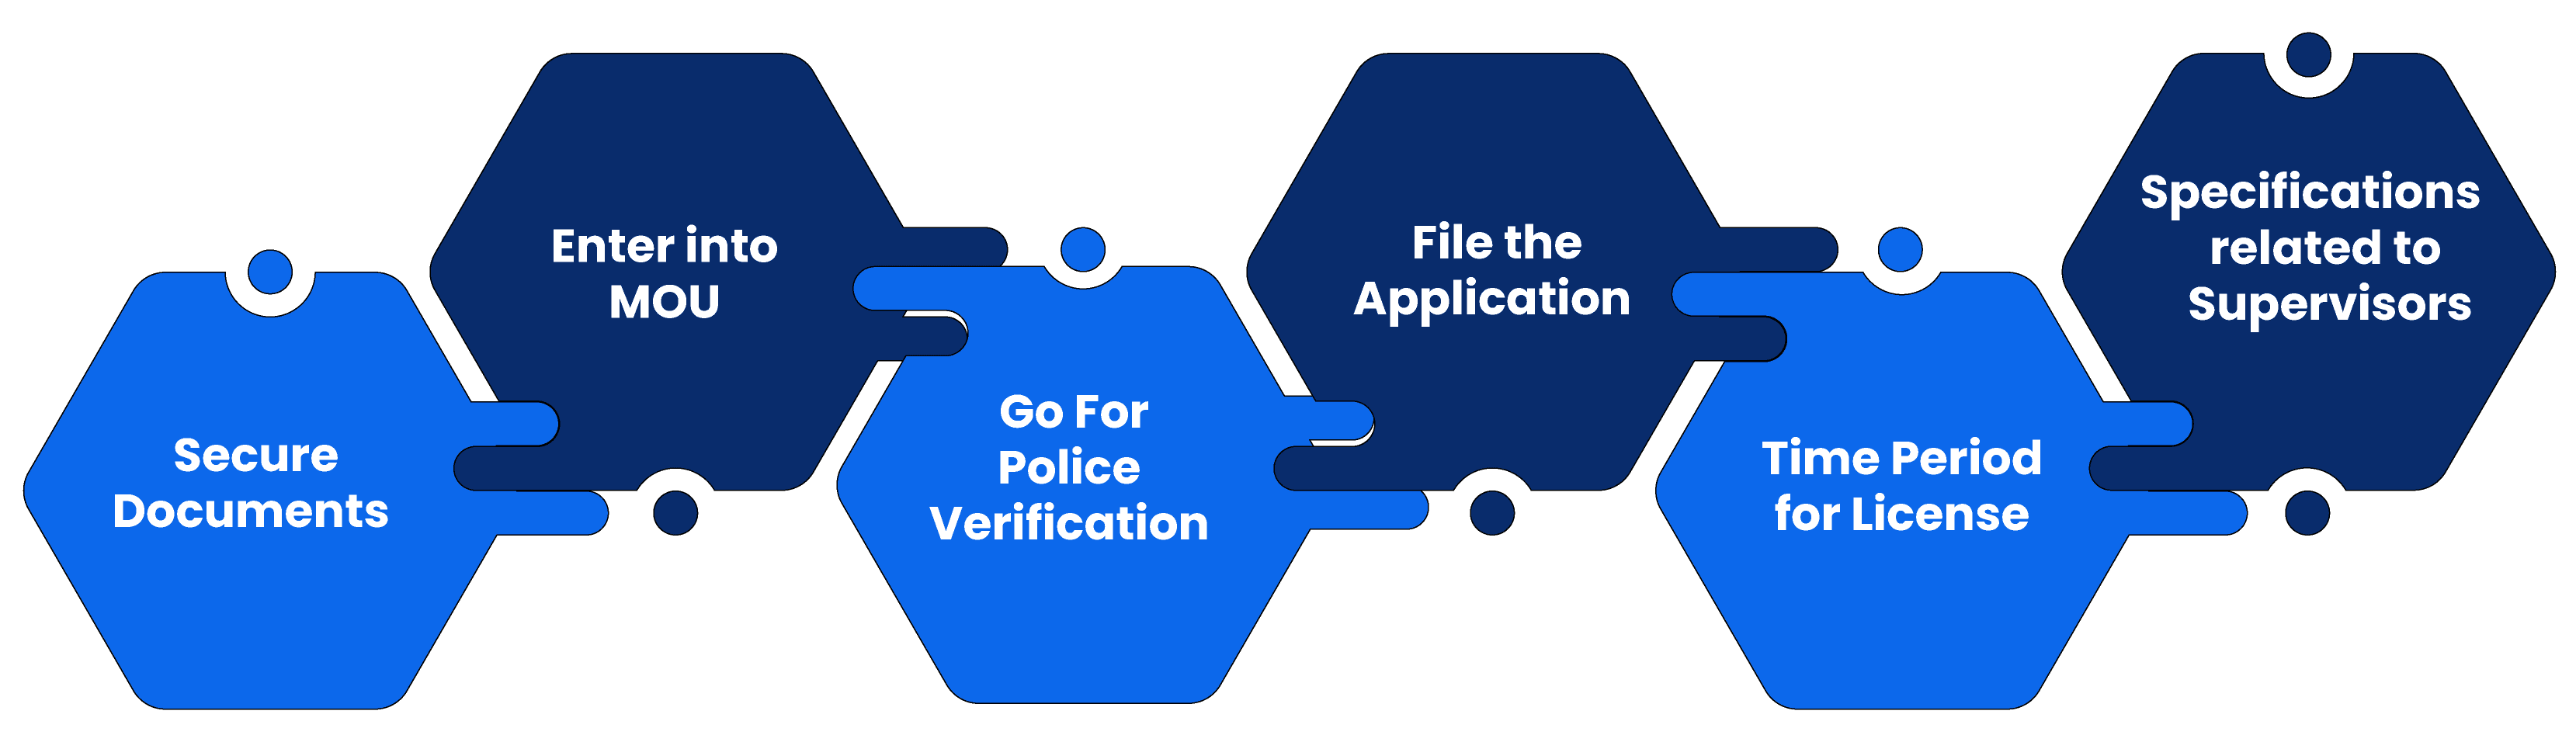 How do I apply for a PSARA License? (PSARA License Procedure)